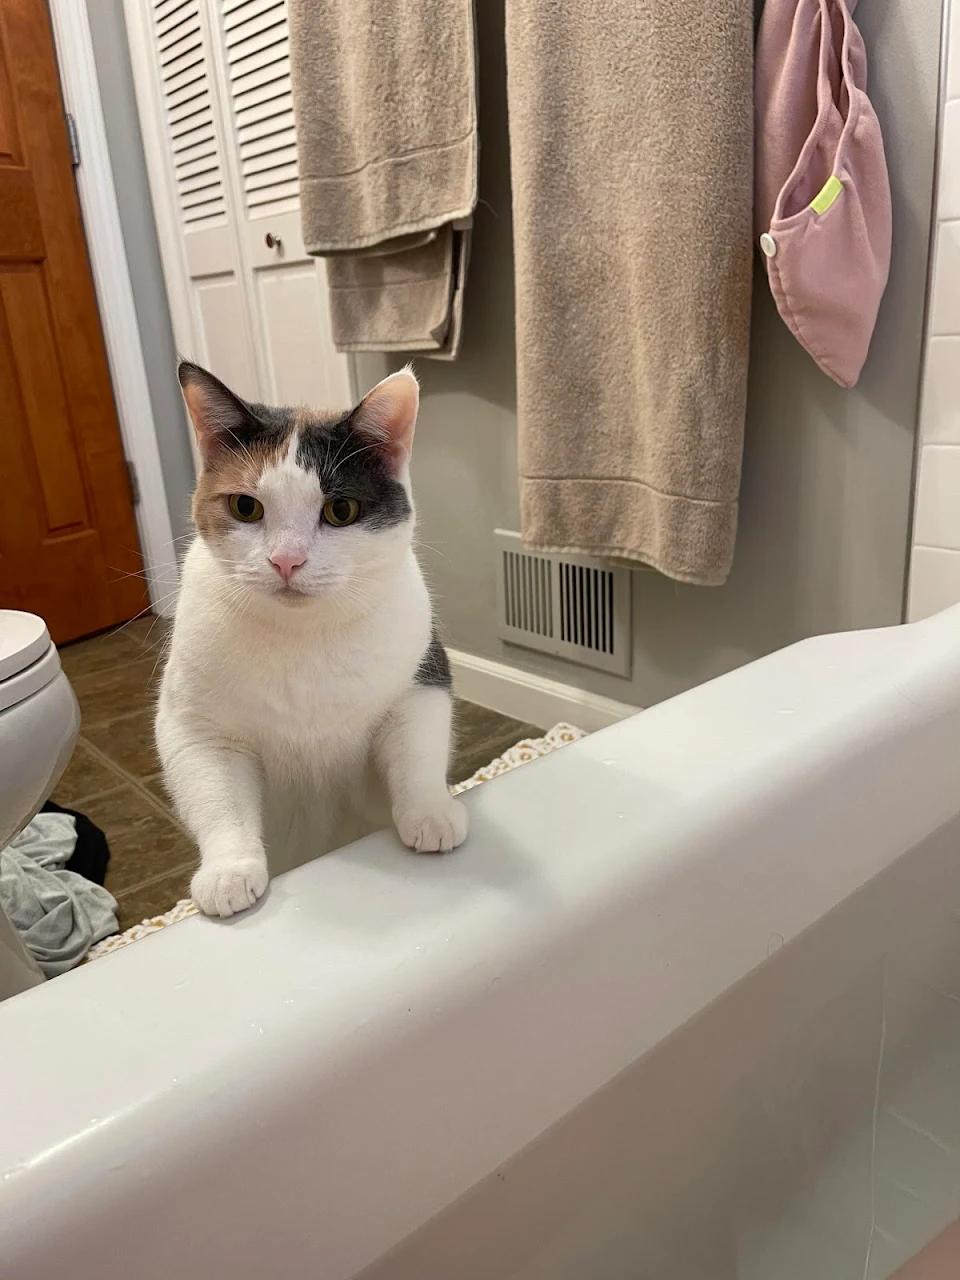 As long as I've had Callie, we've never had a bathtub. Until now.